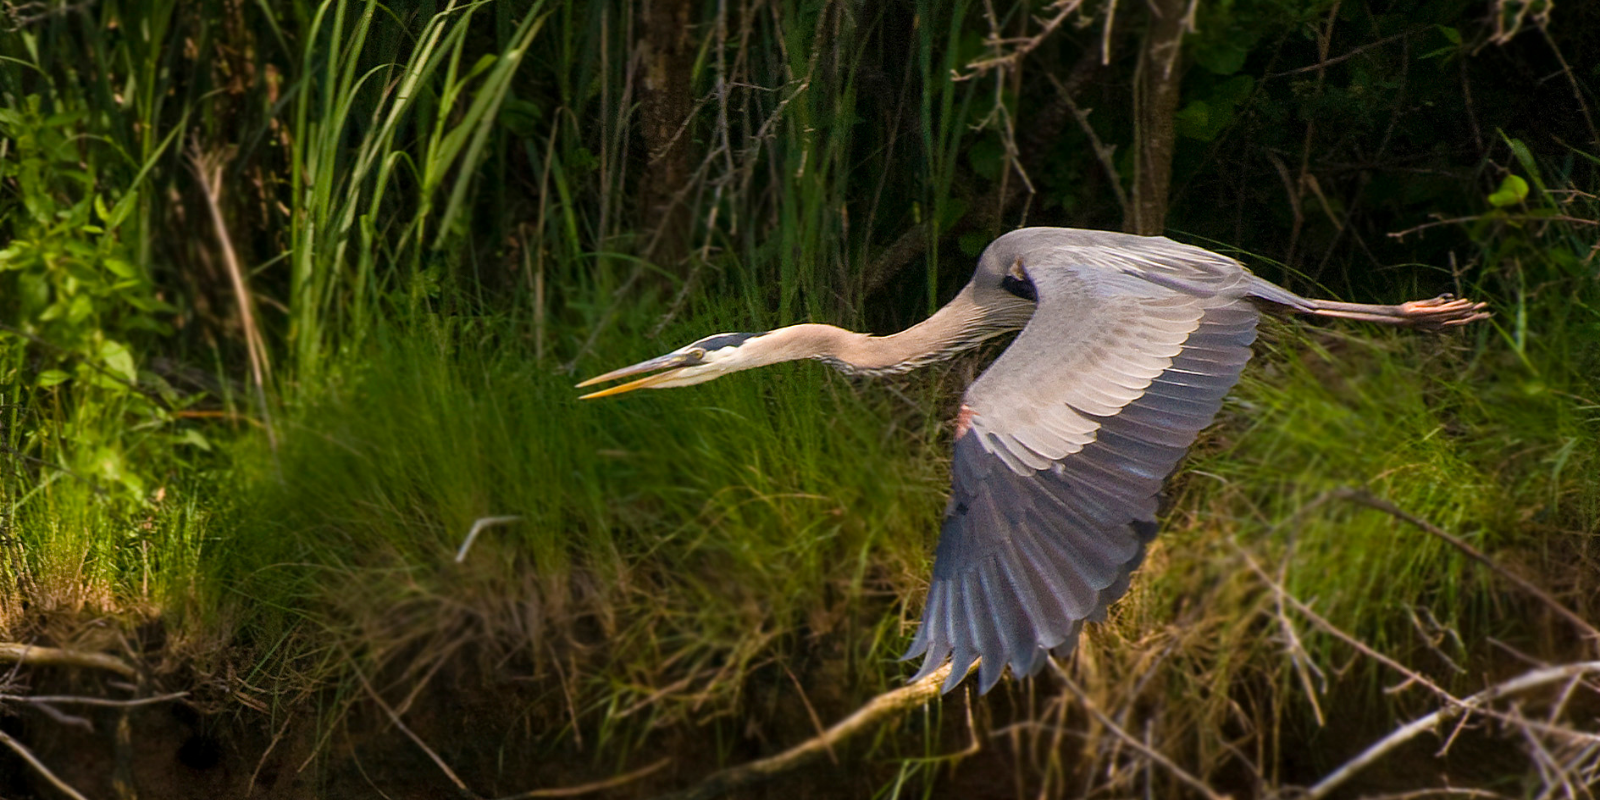 A flying heron in a wetland